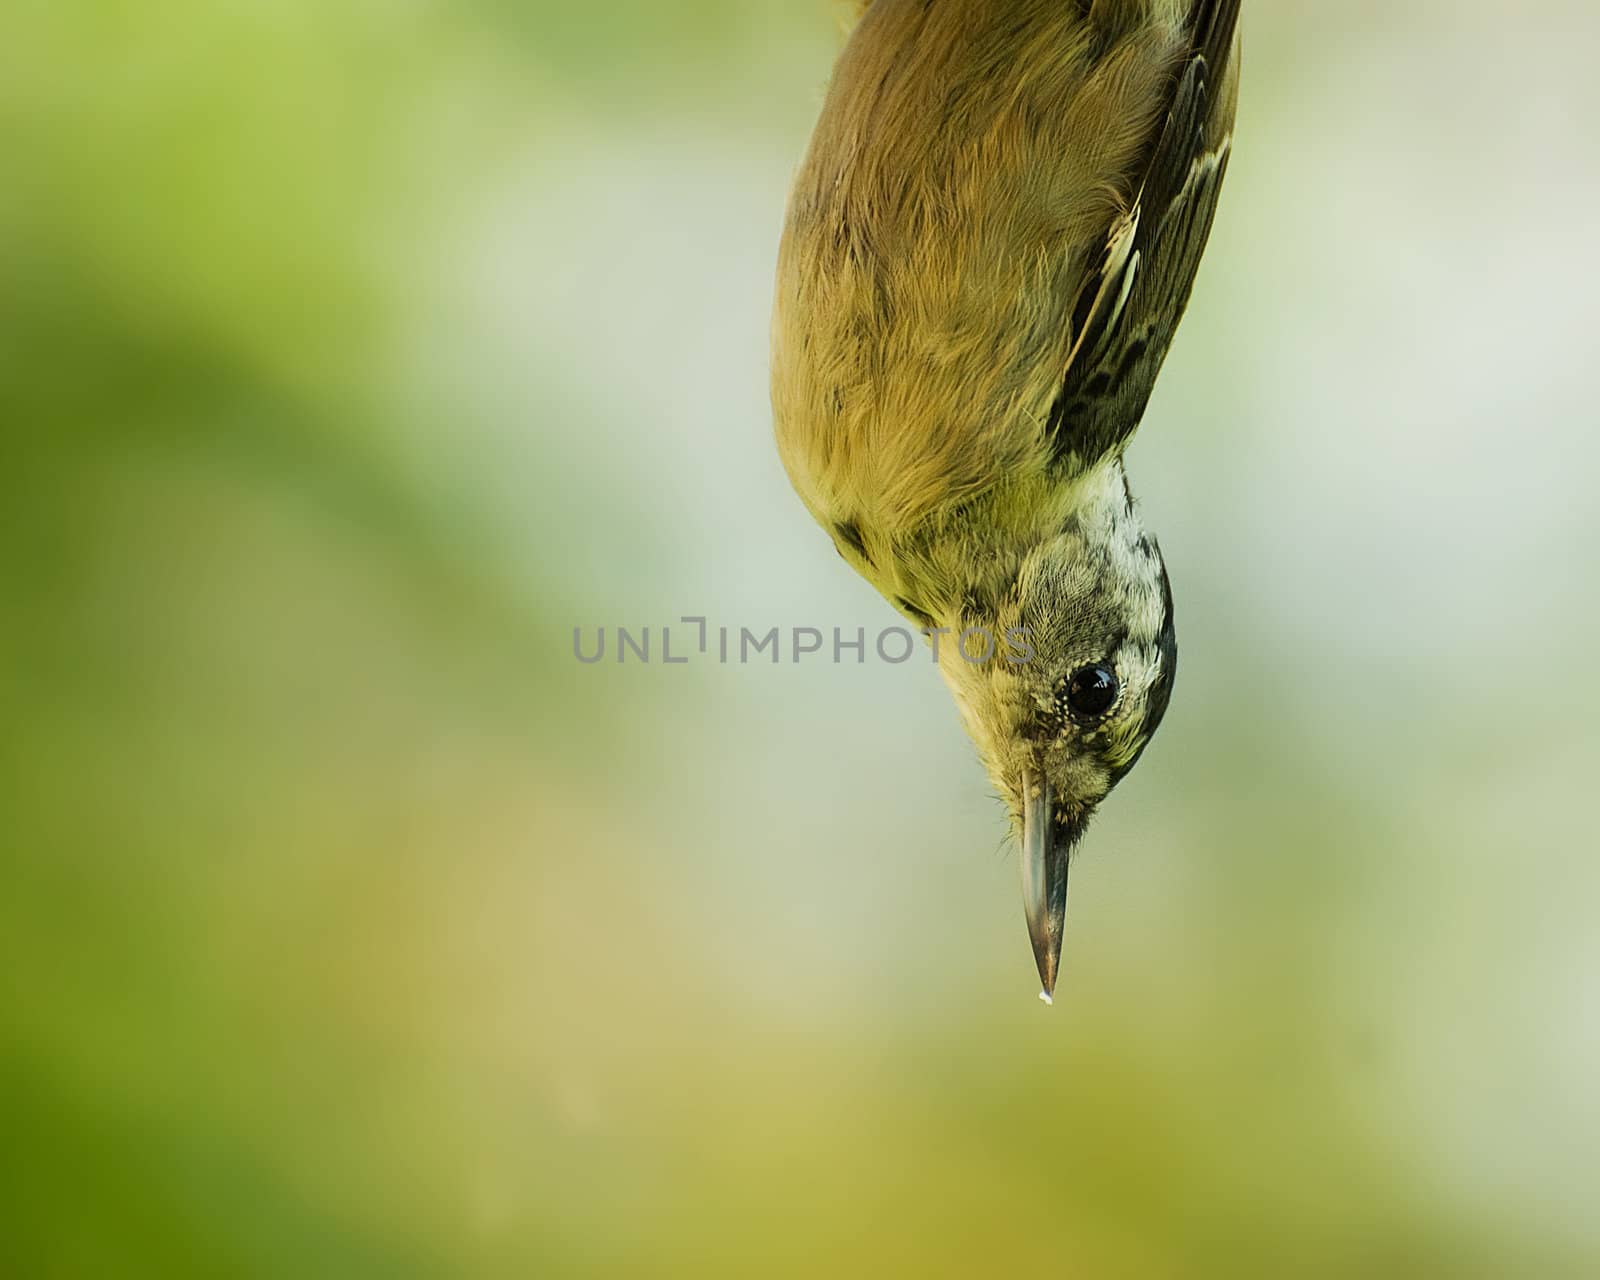 A small green bird eating from a birdfeeder.